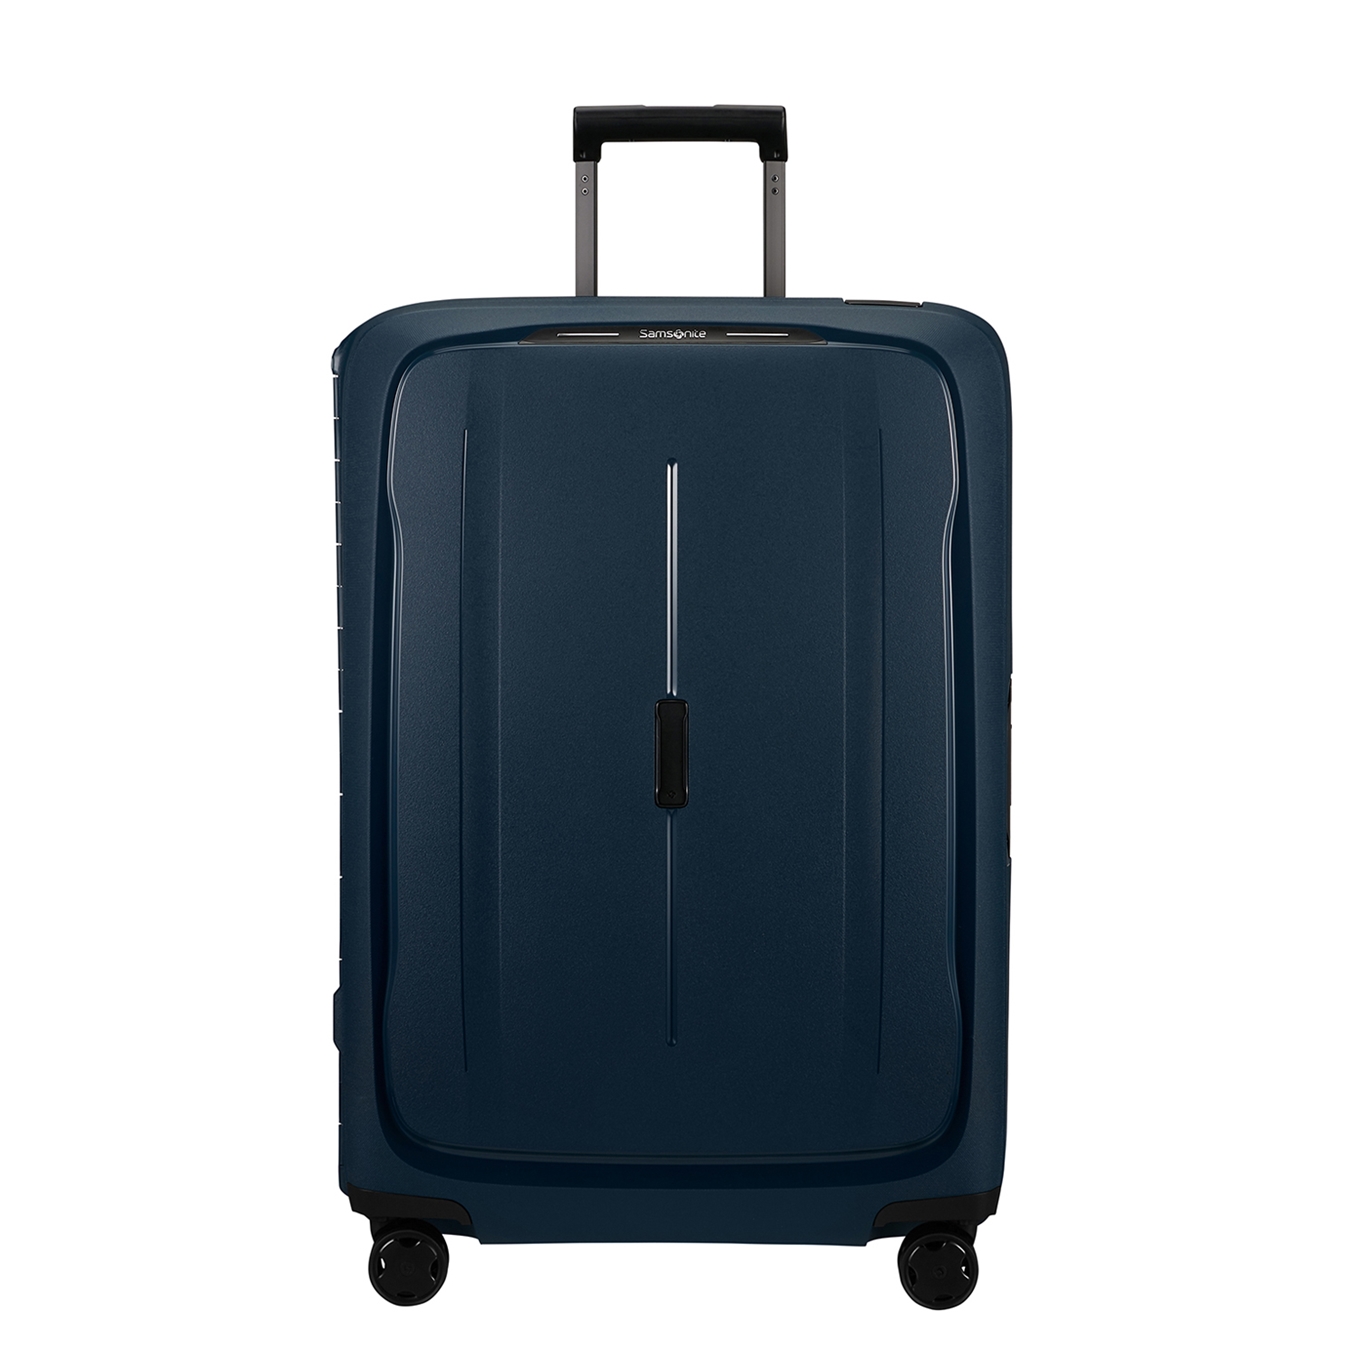 betaling Gemoedsrust Microcomputer Koffer kopen? Alle Koffers morgen in Huis | Travelbags.nl